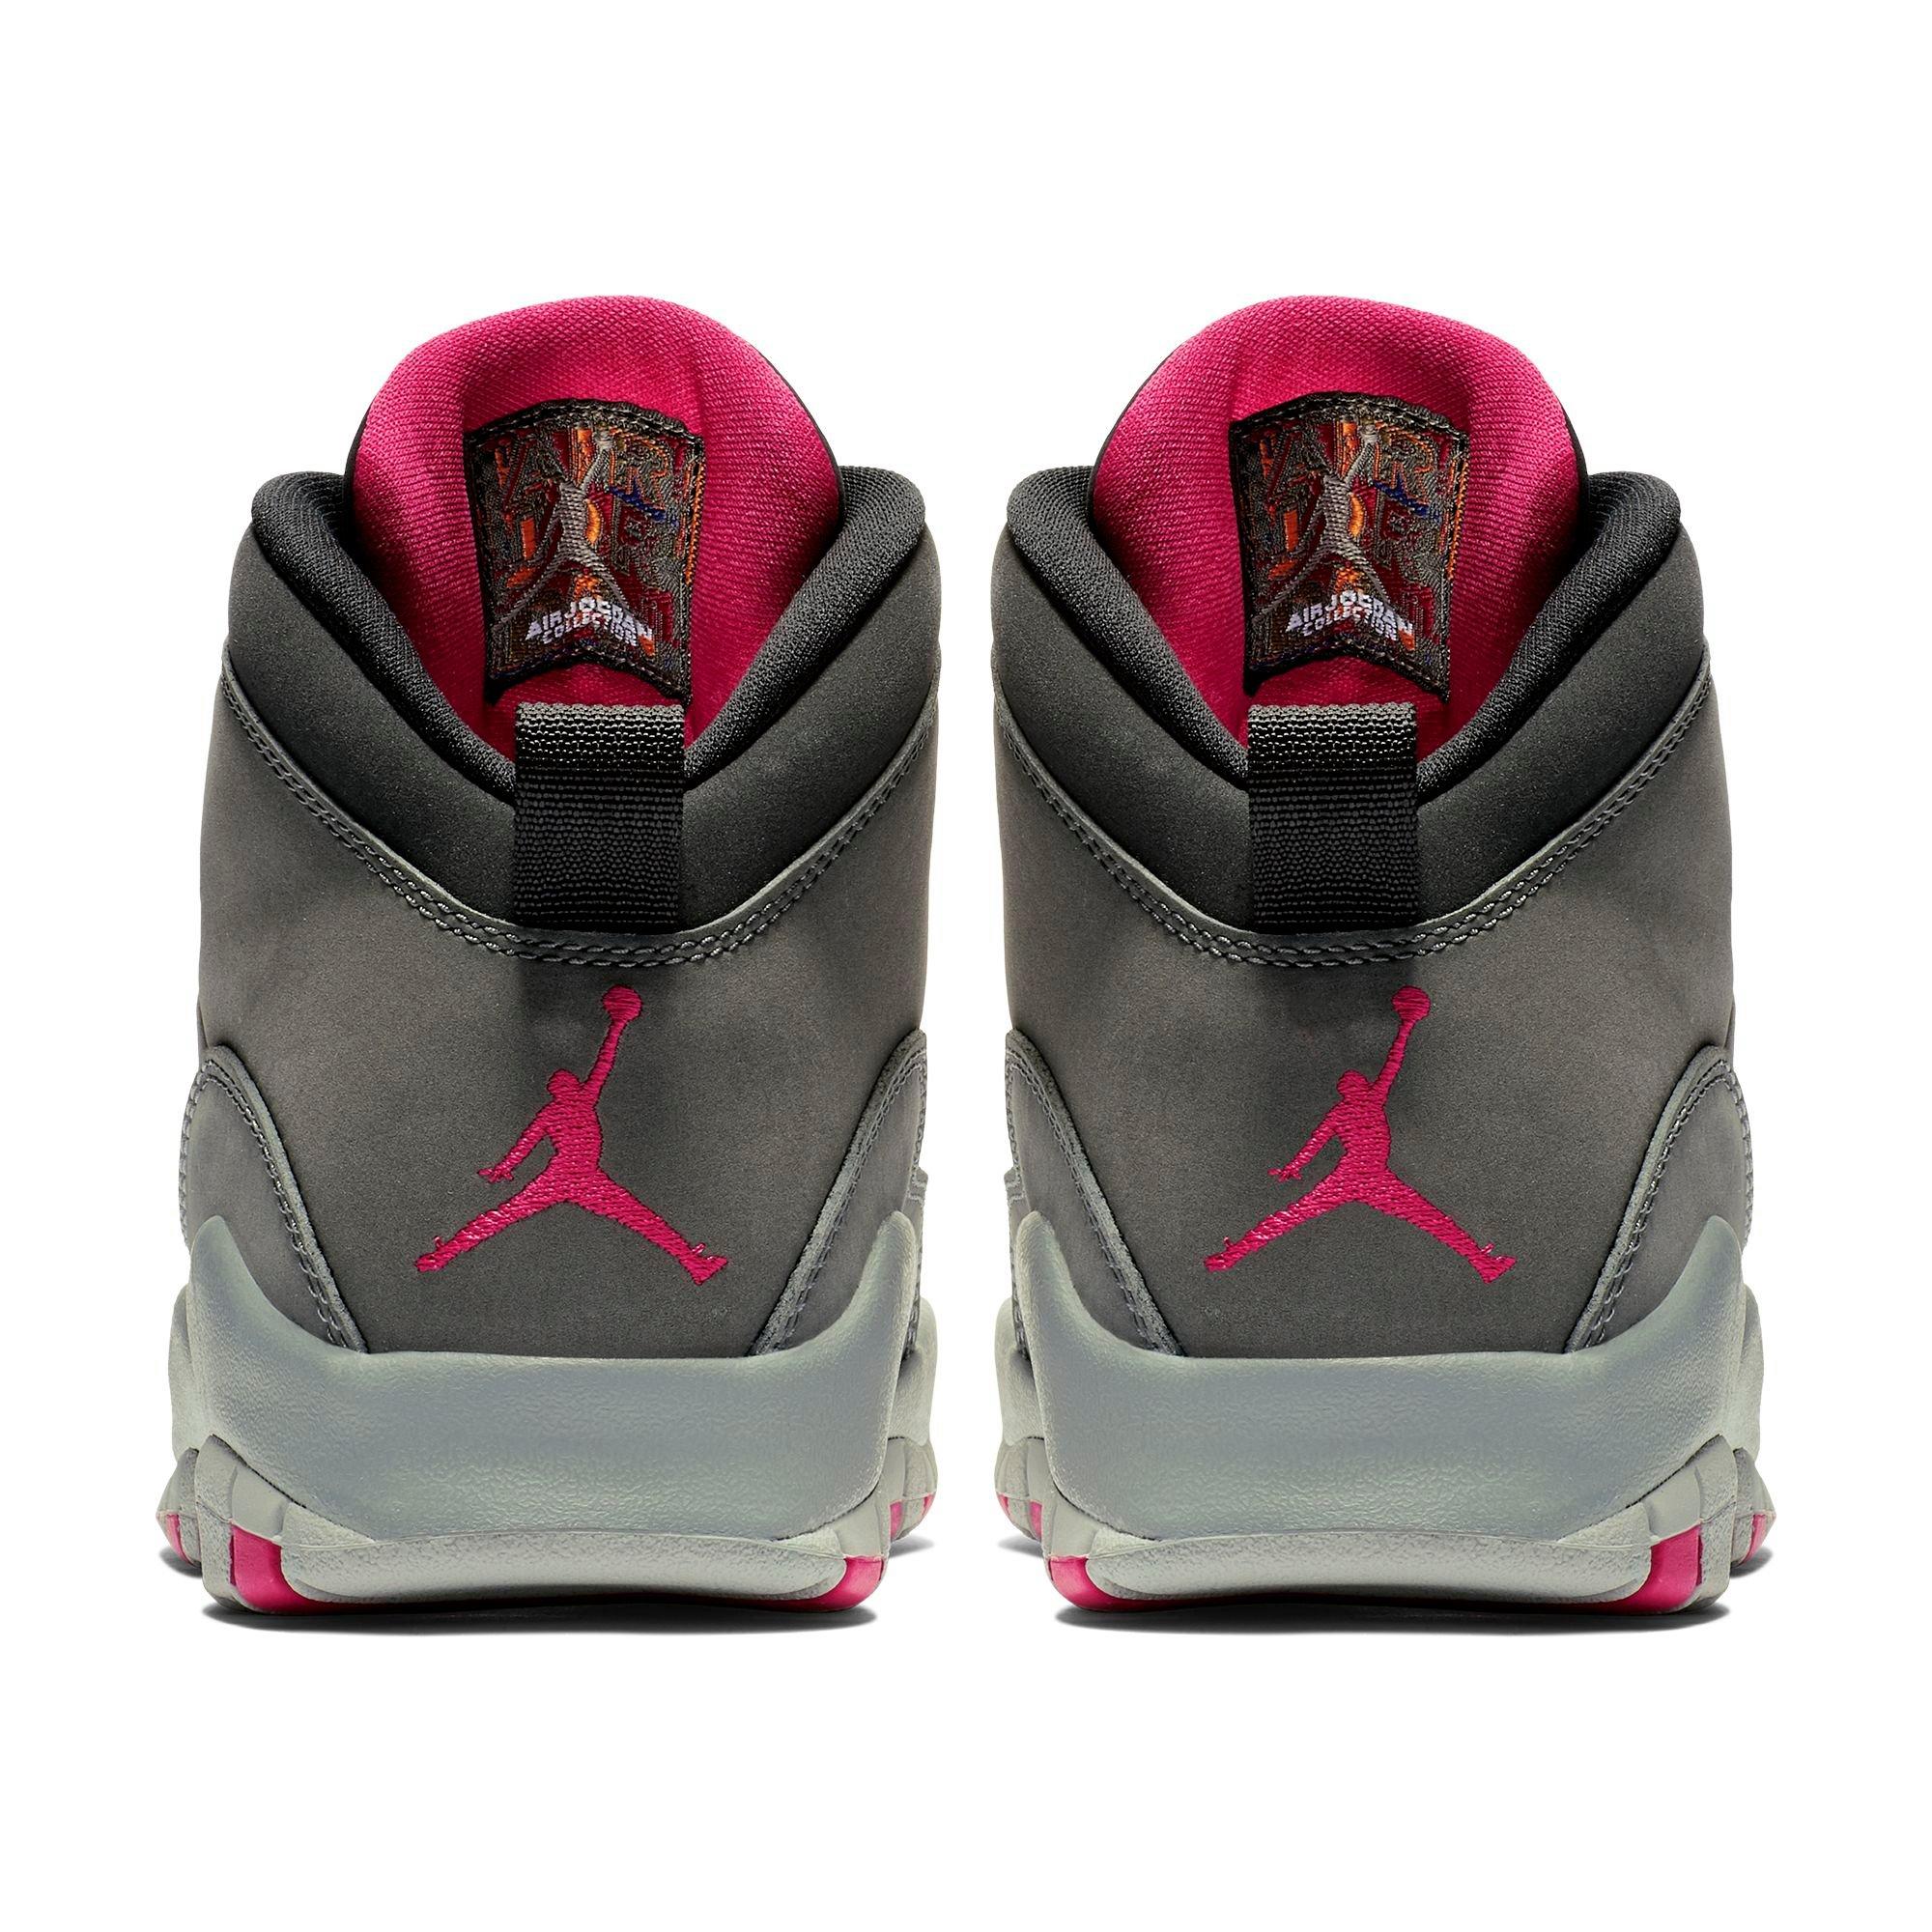 grey and pink jordan 10